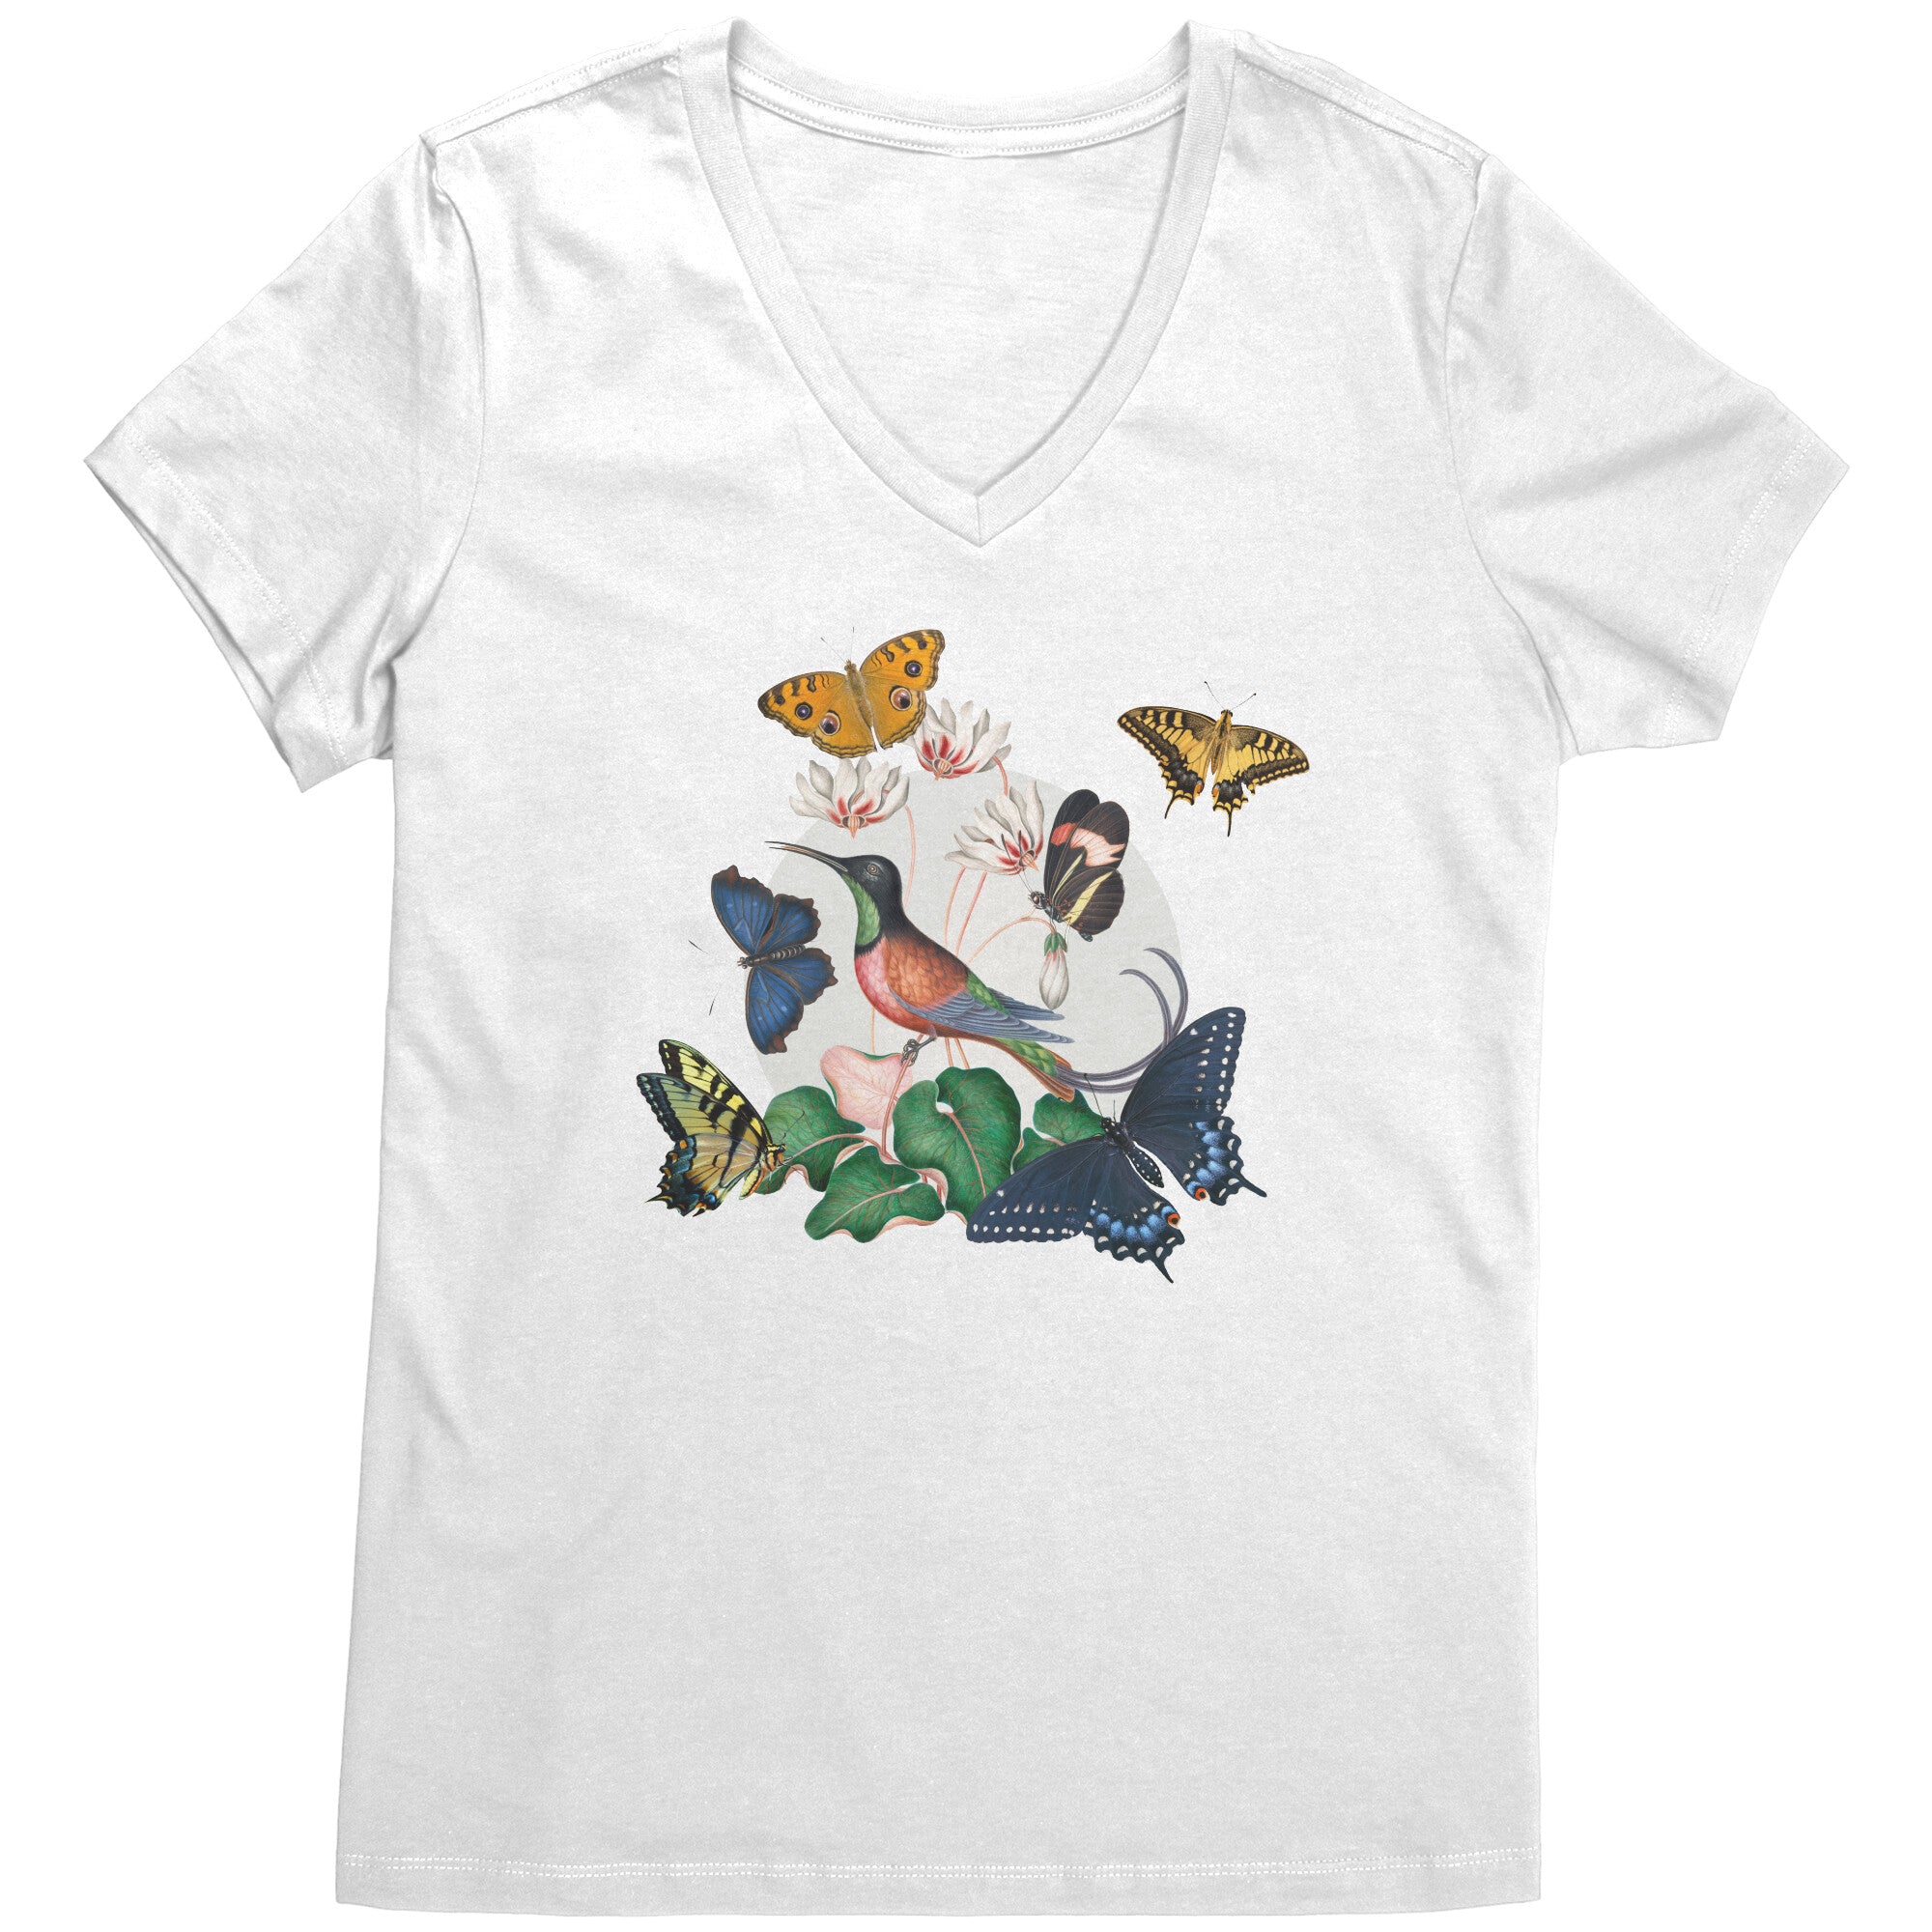 Hummingbird Shirt For Women Unique Hummingbird Gifts TShirt white